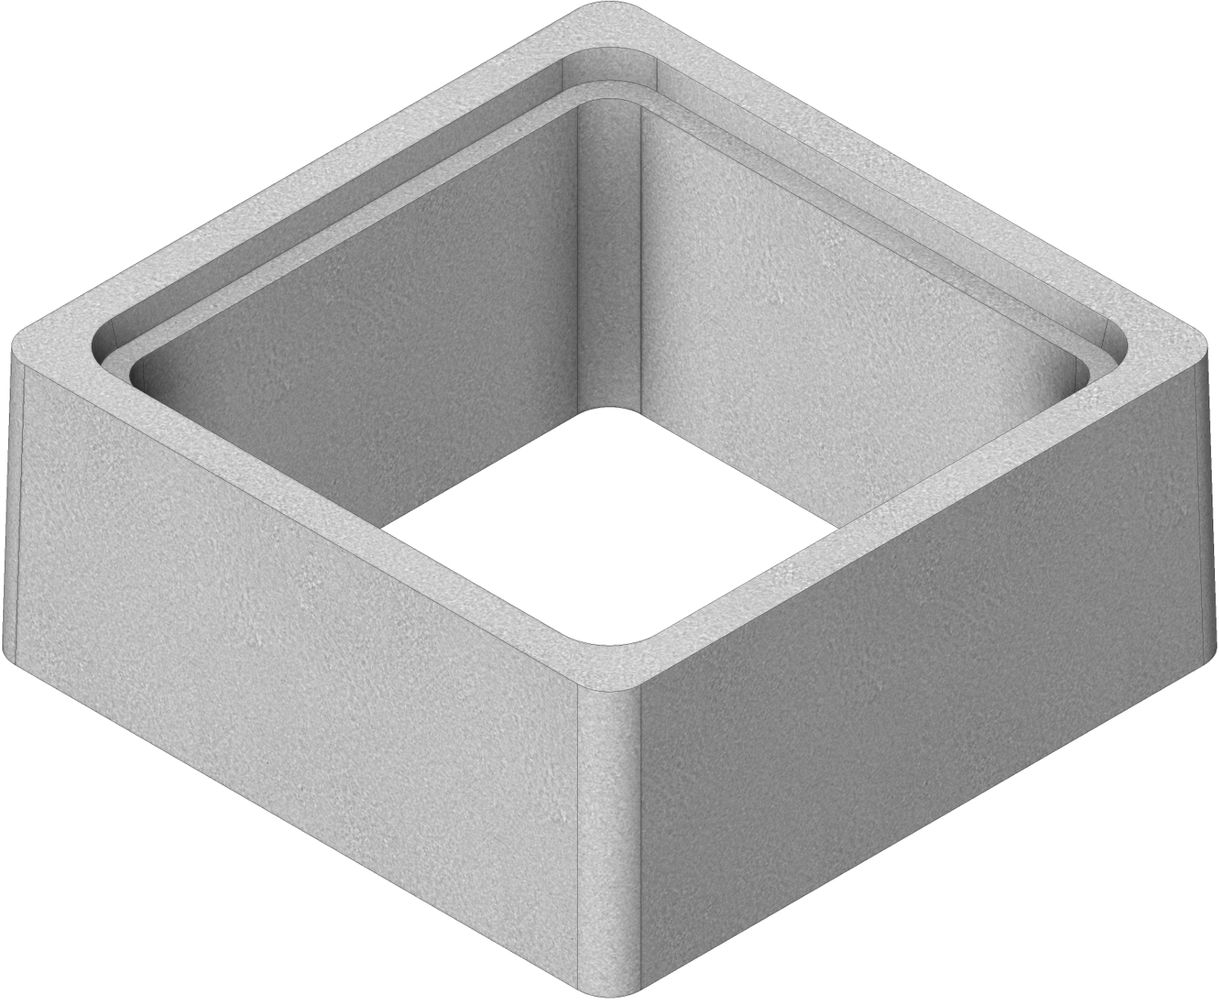 rehausse-beton-boite-pluviale-500x500-h200-thebault-0